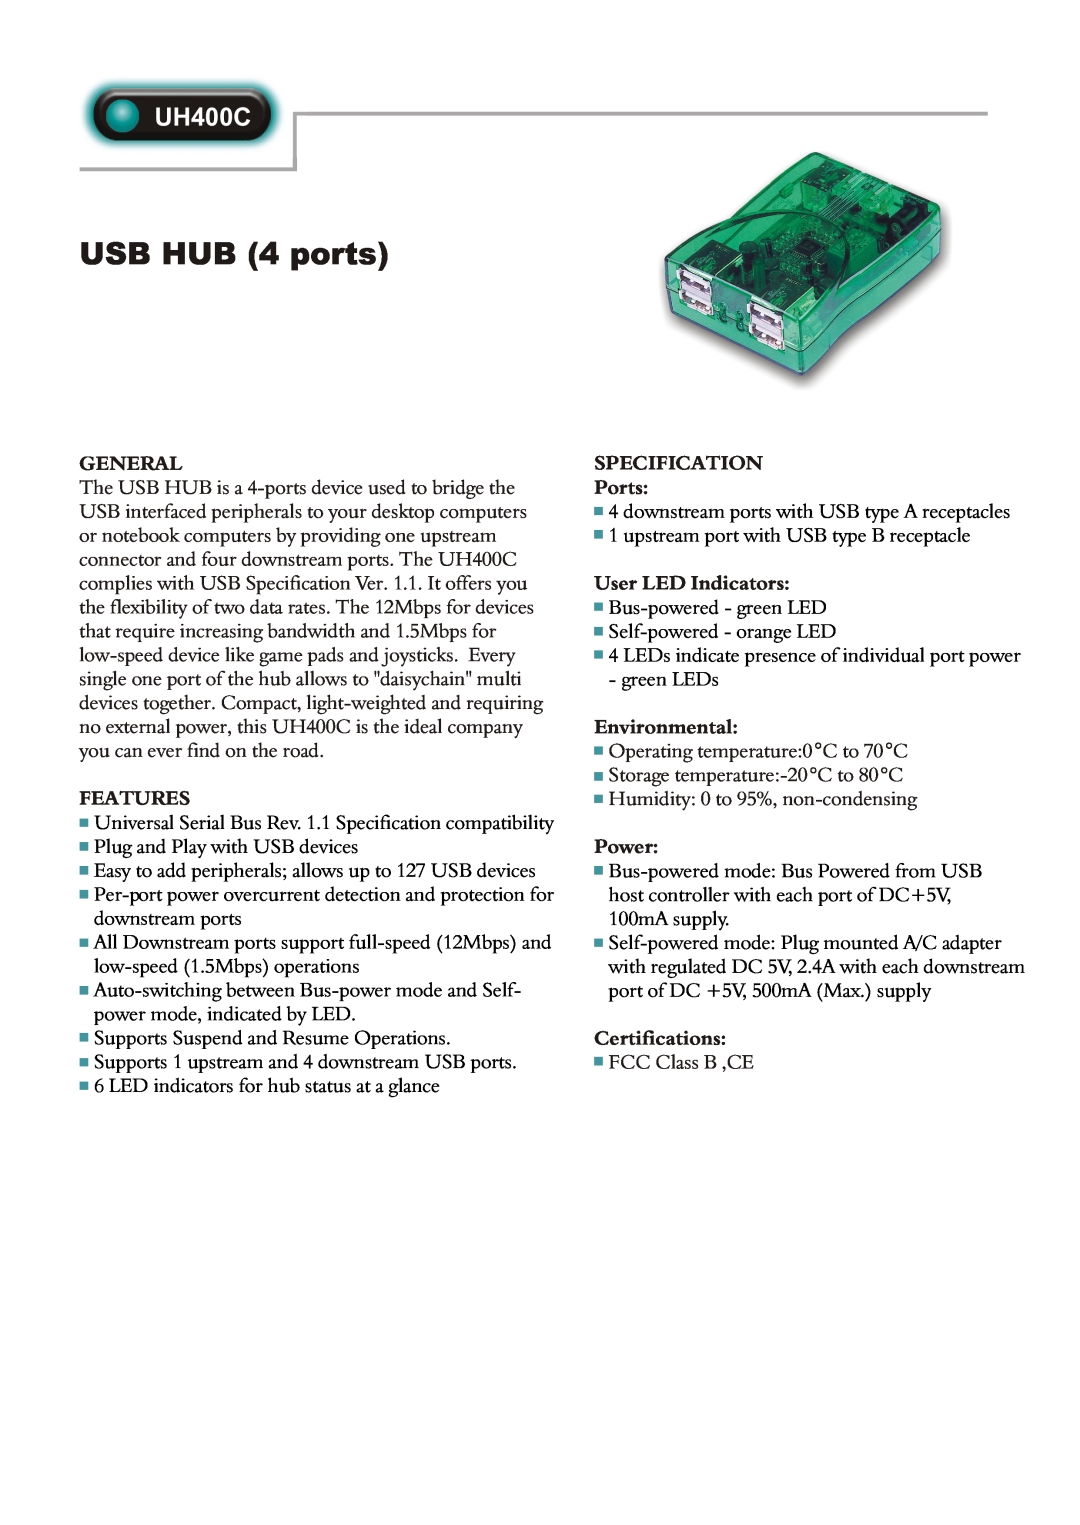 Abocom UH400C manual USB HUB 4 ports, General, Features, SPECIFICATION Ports, User LED Indicators, Environmental, Power 